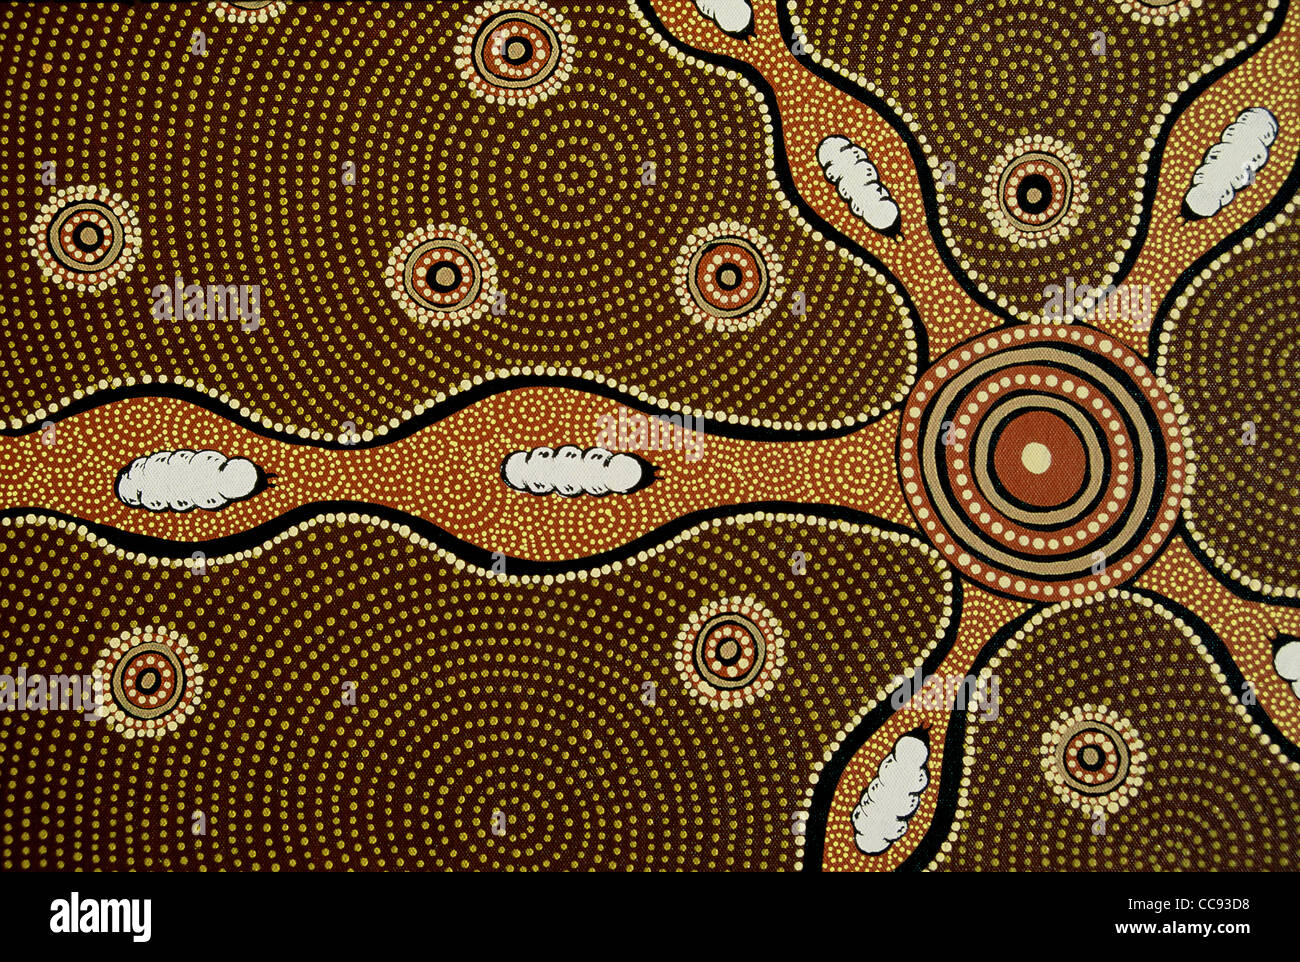 Witchetty grubs, aboriginal art, NT Australia, 1991 Stock Photo